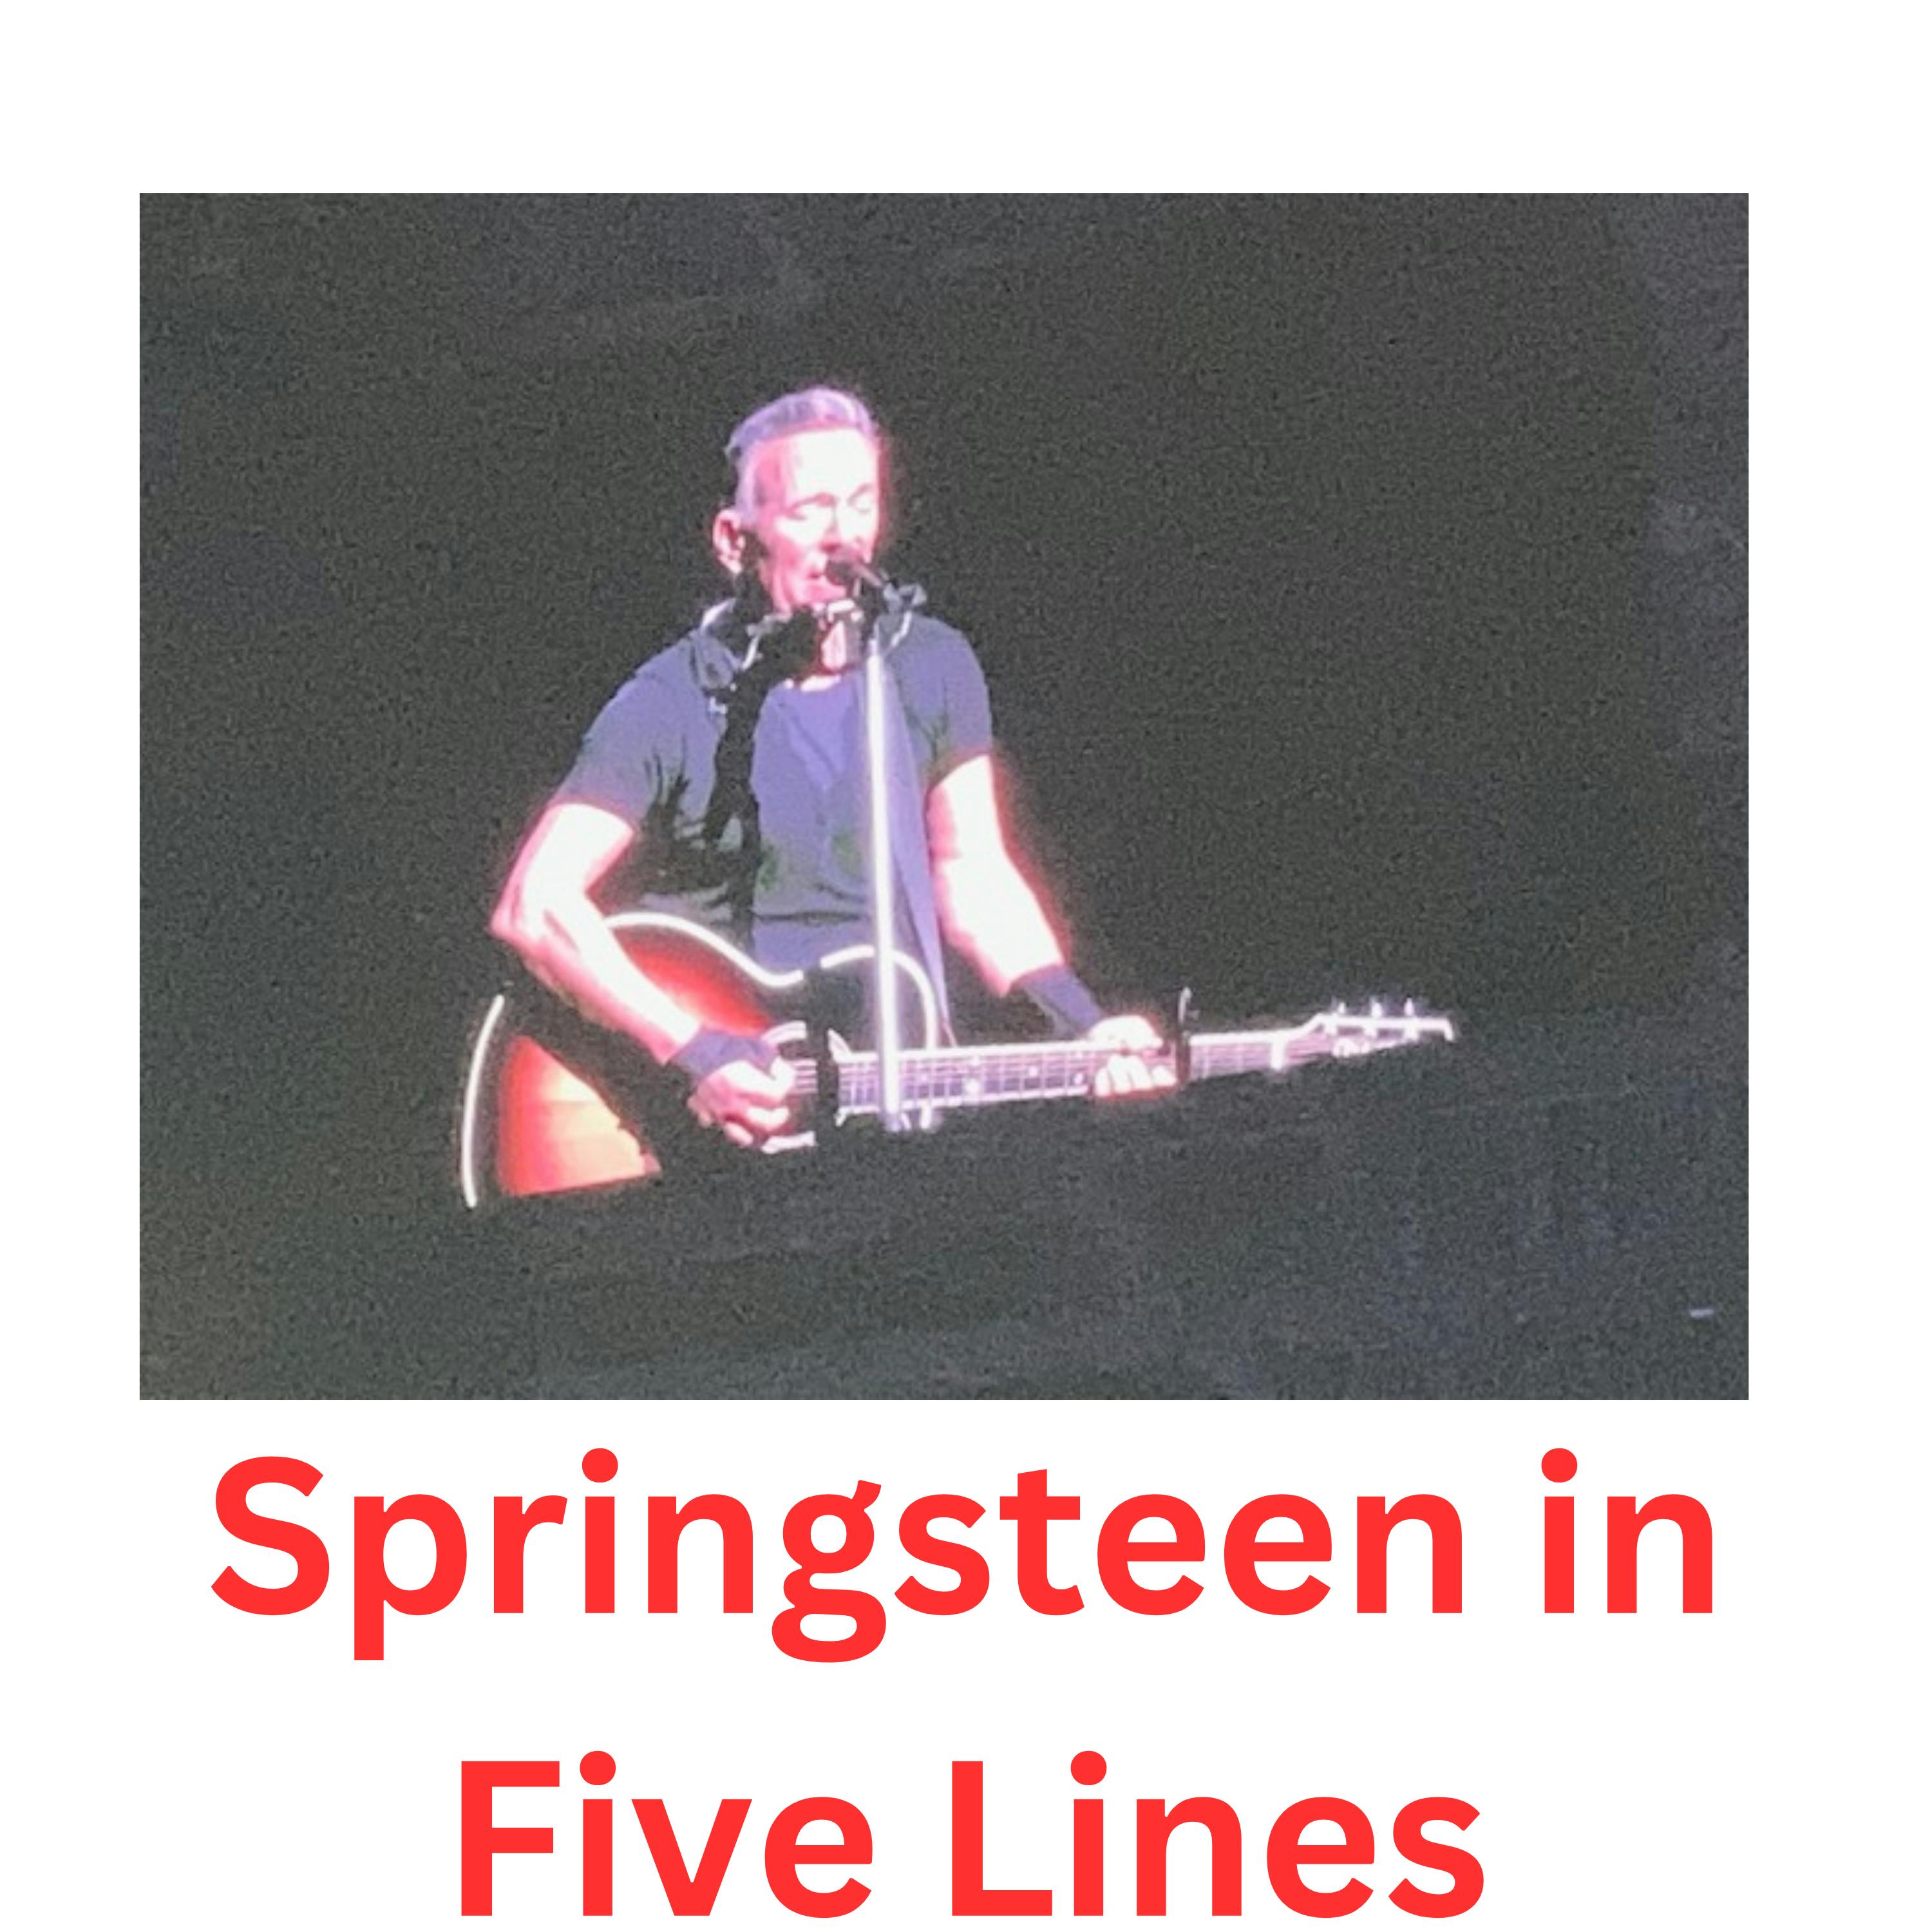 Jake Berry - Springsteen in 5 lines